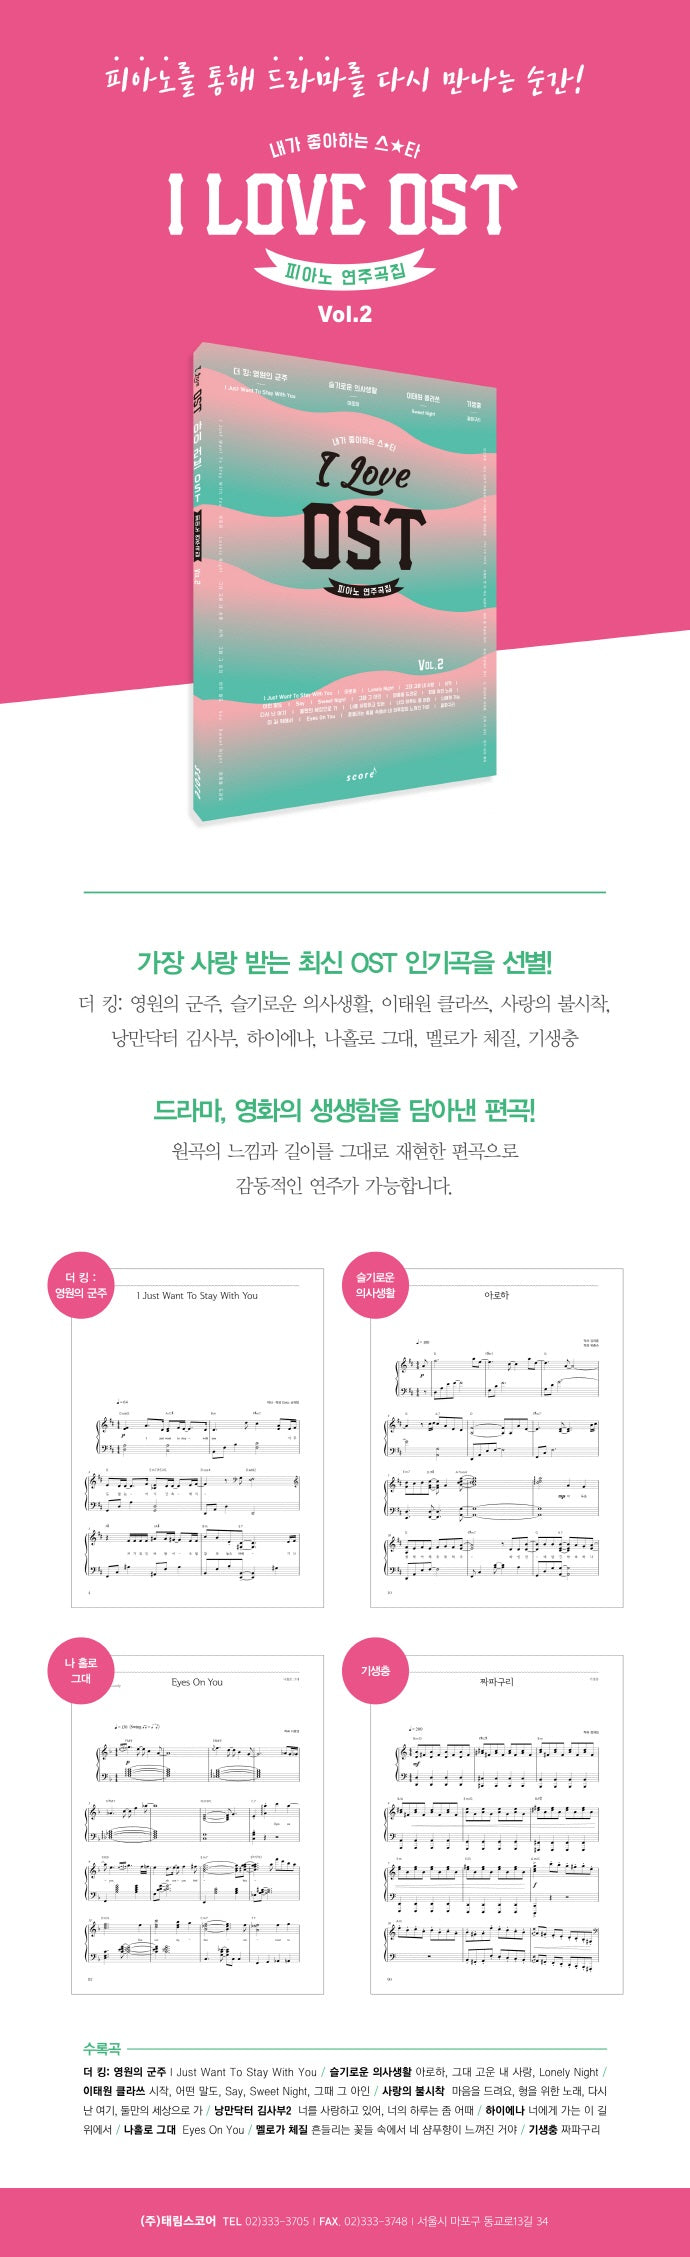 Ich liebe OST Piano Scorebook Vol. 2